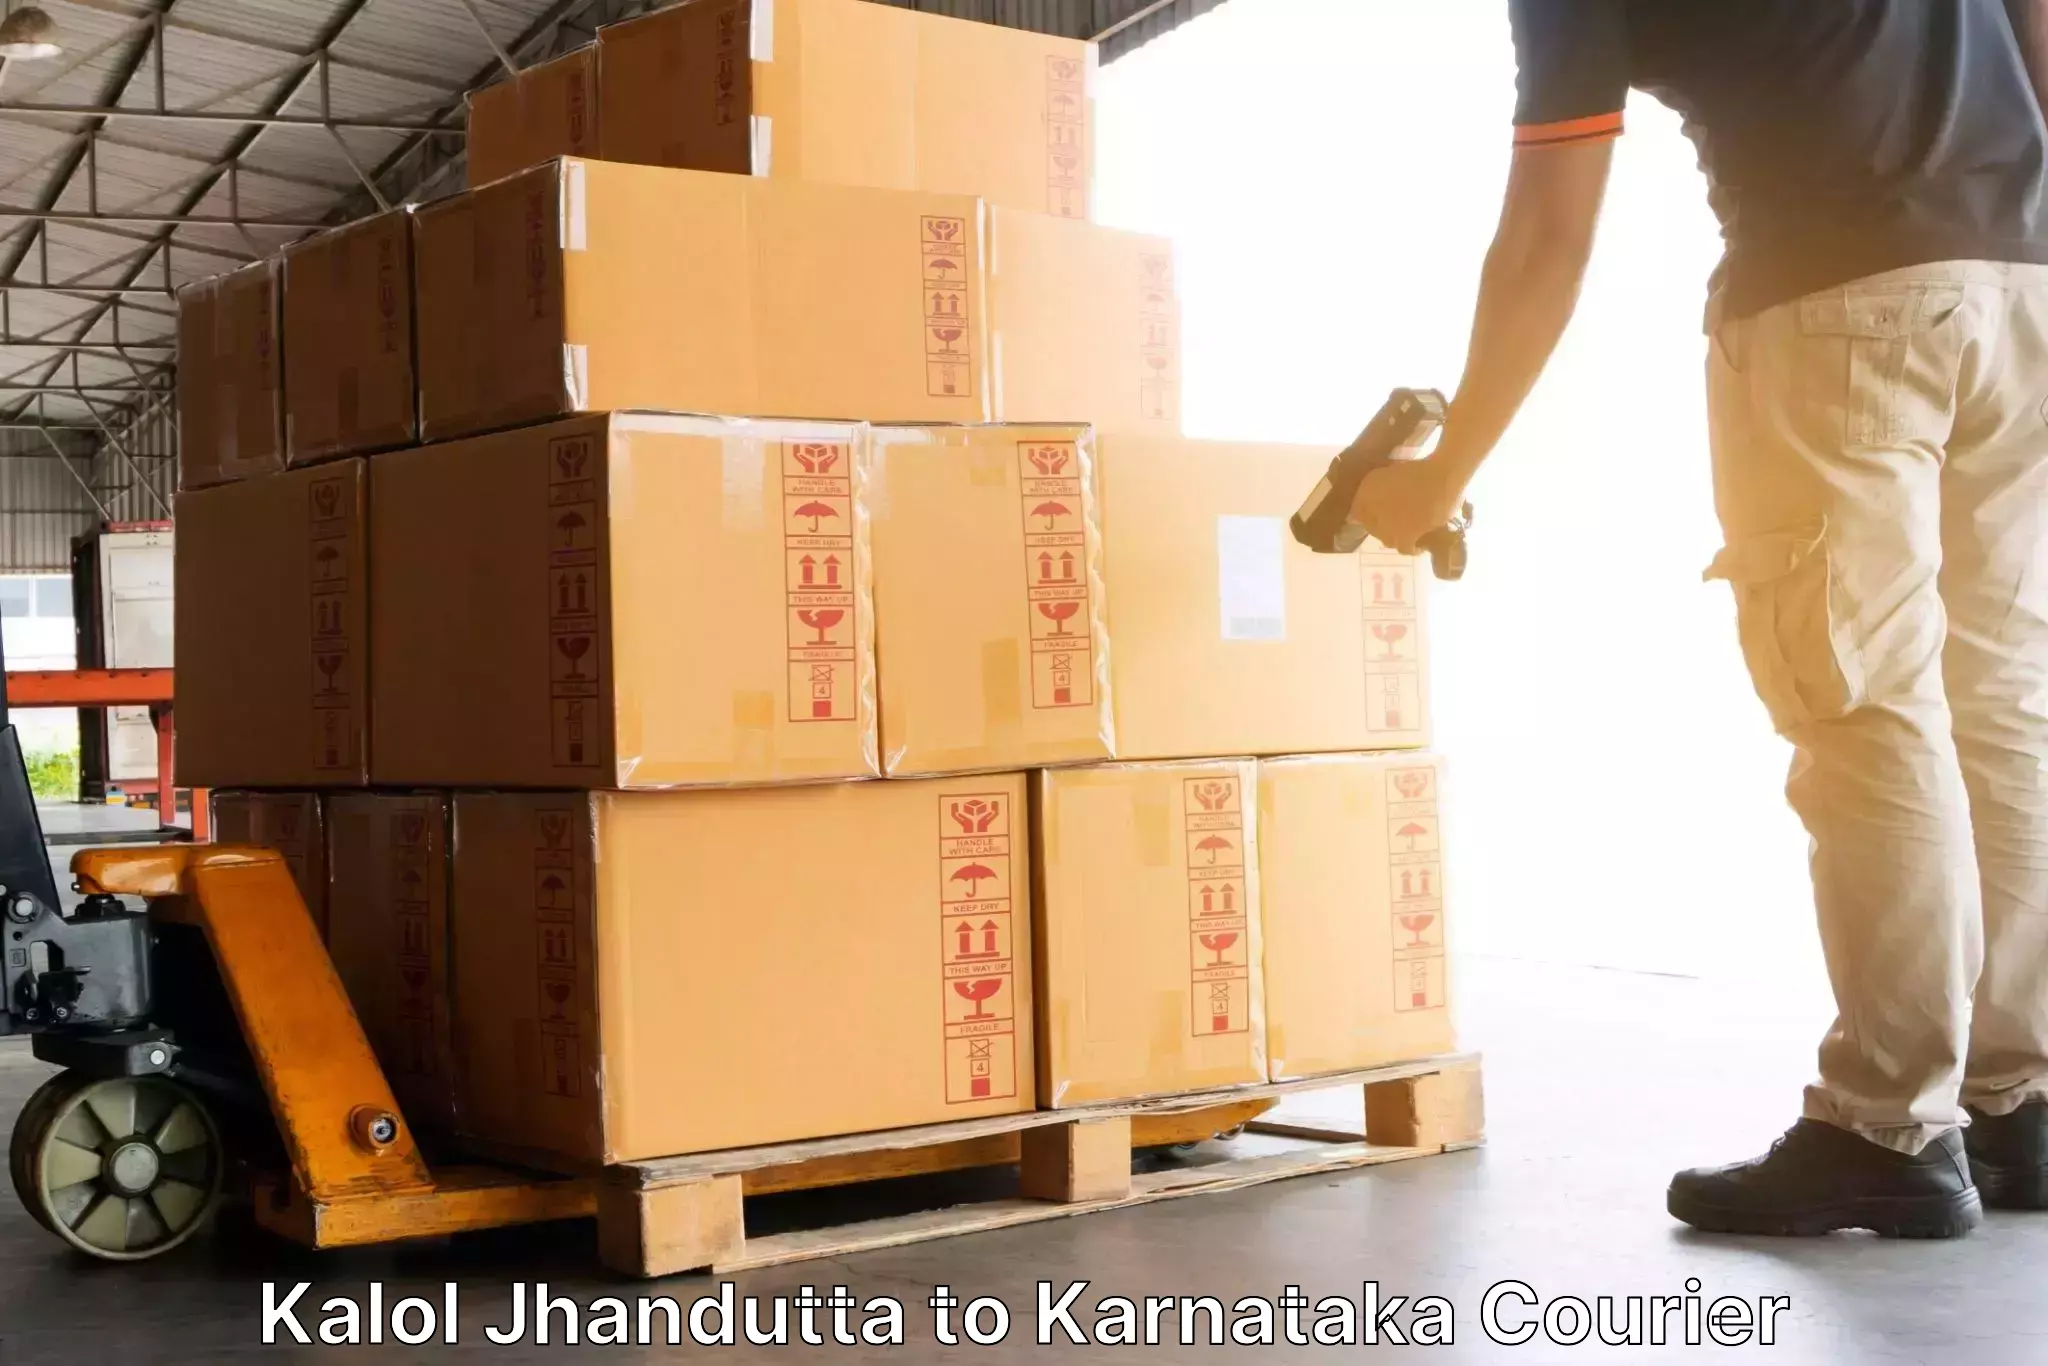 Online shipping calculator Kalol Jhandutta to Manipal Academy of Higher Education